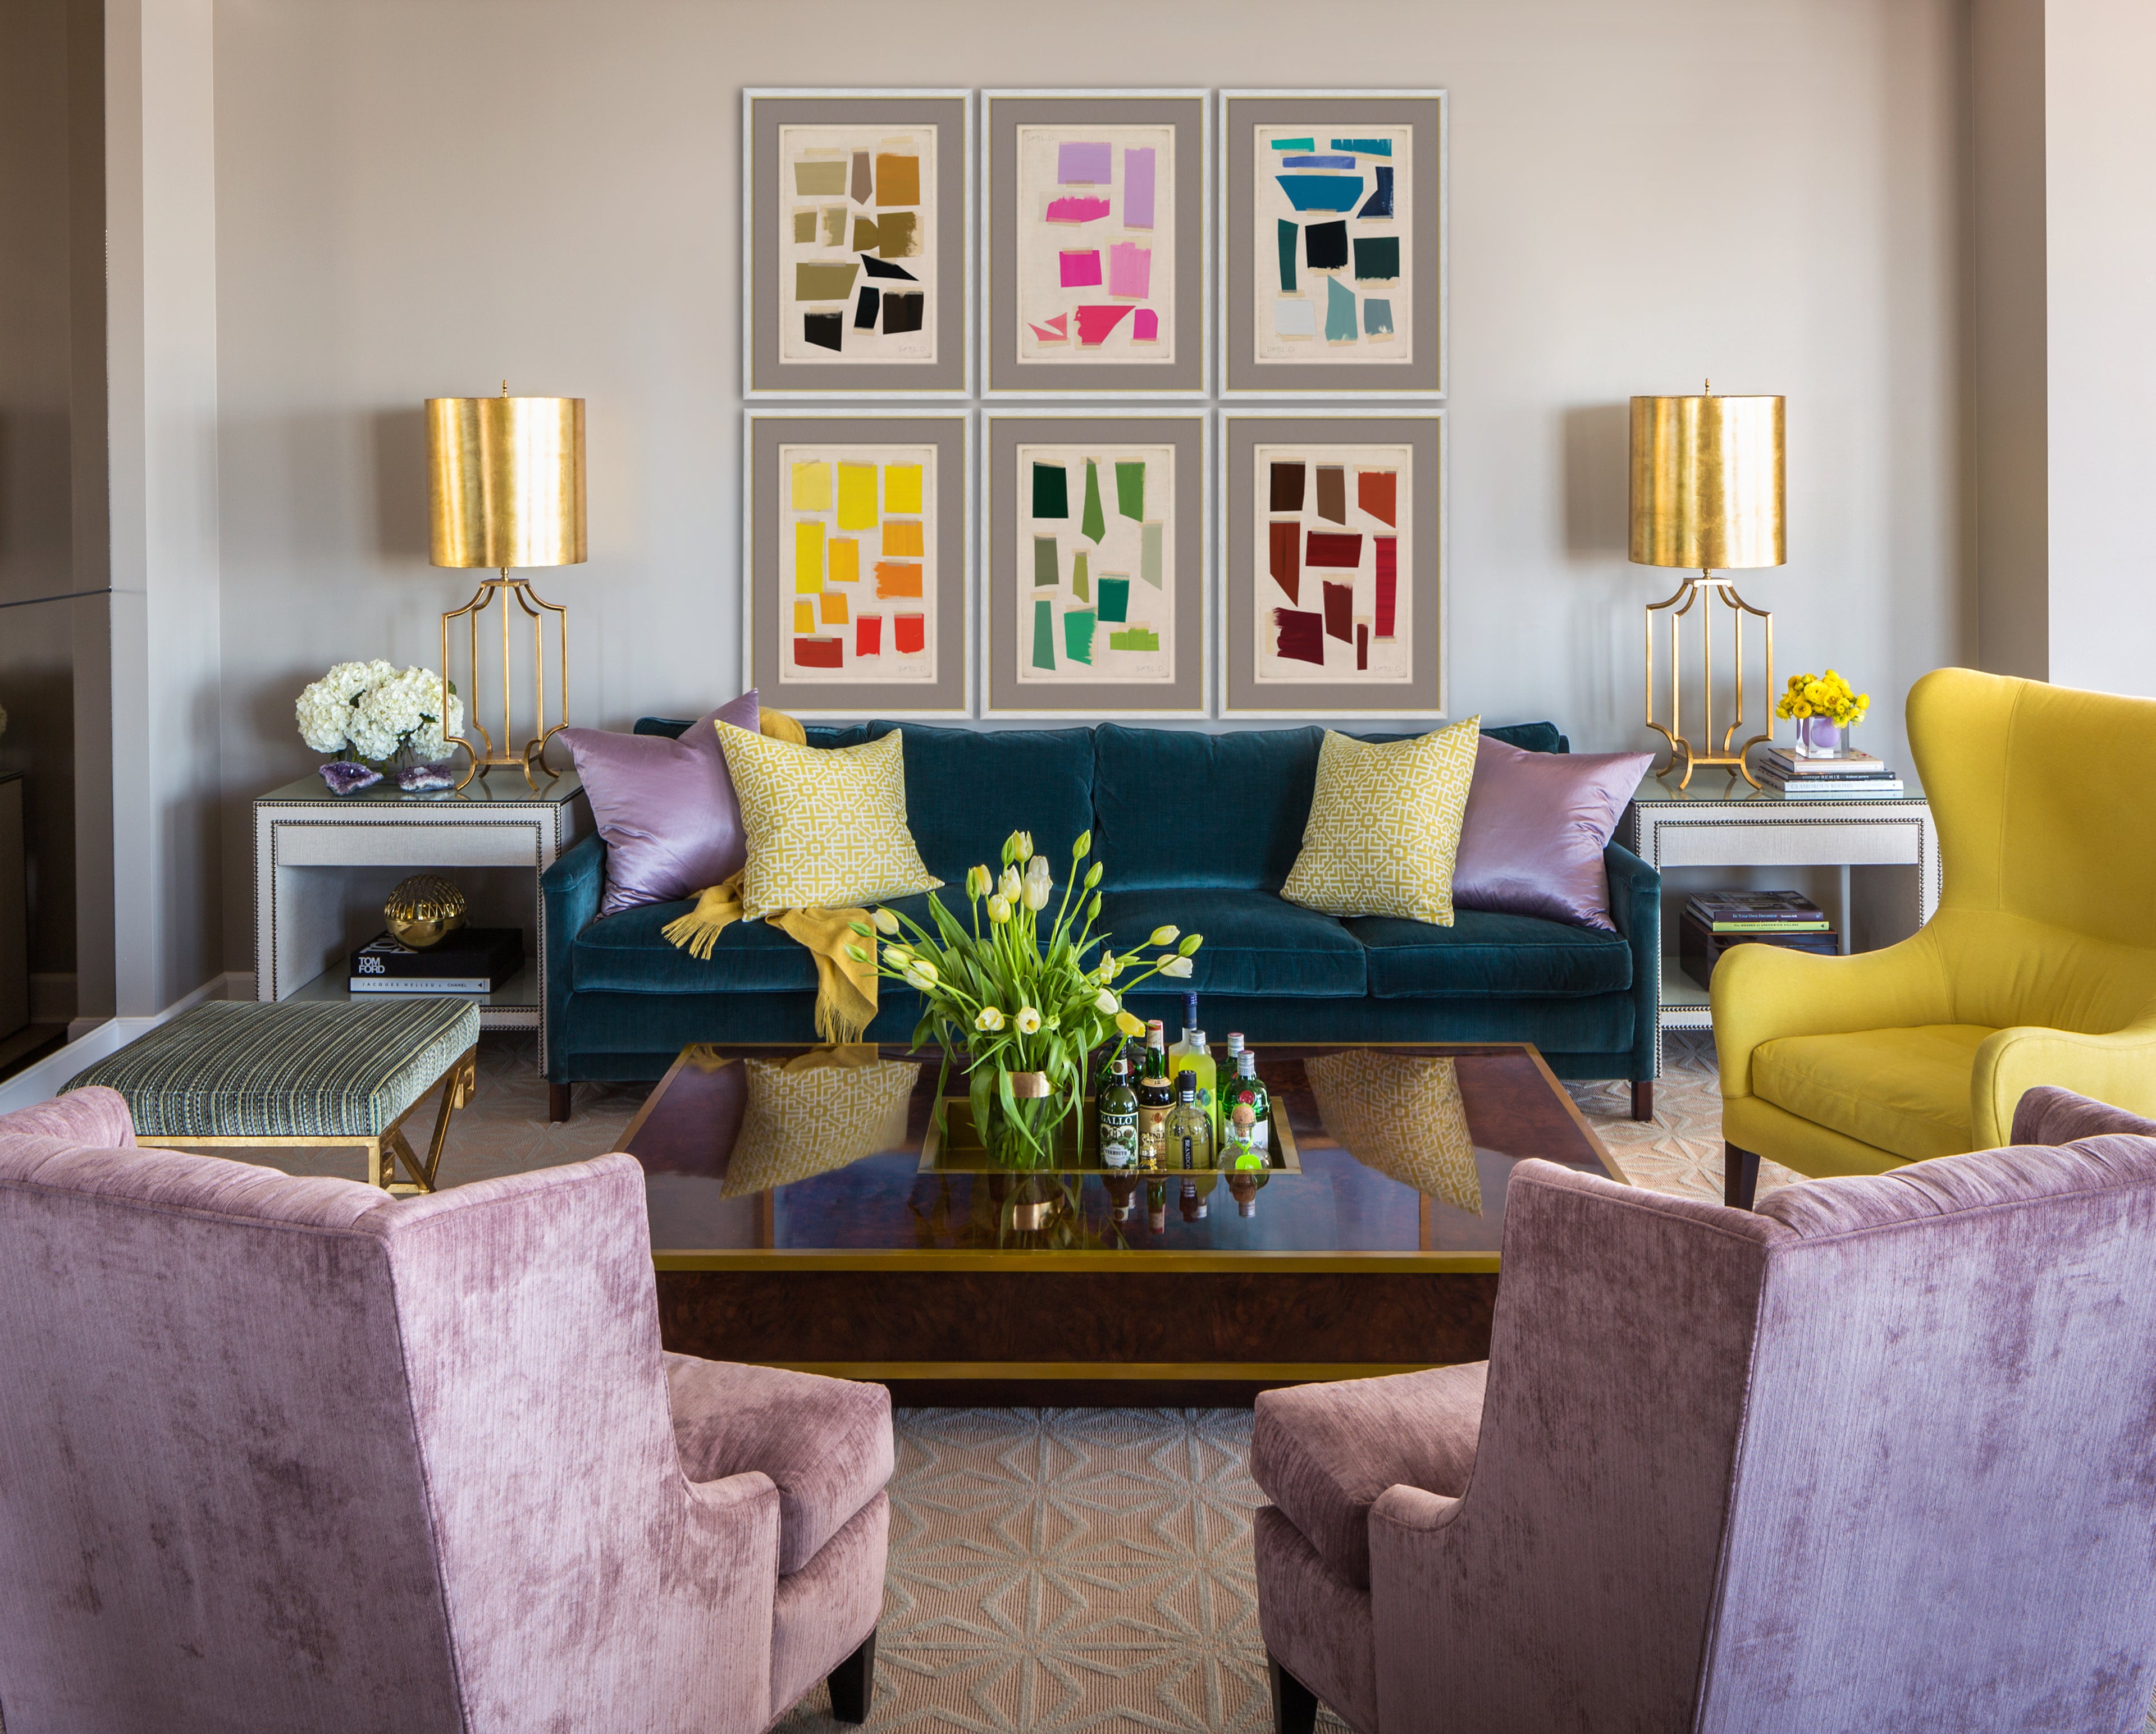 Tobi Fairley Artwork & Colorful Living Room